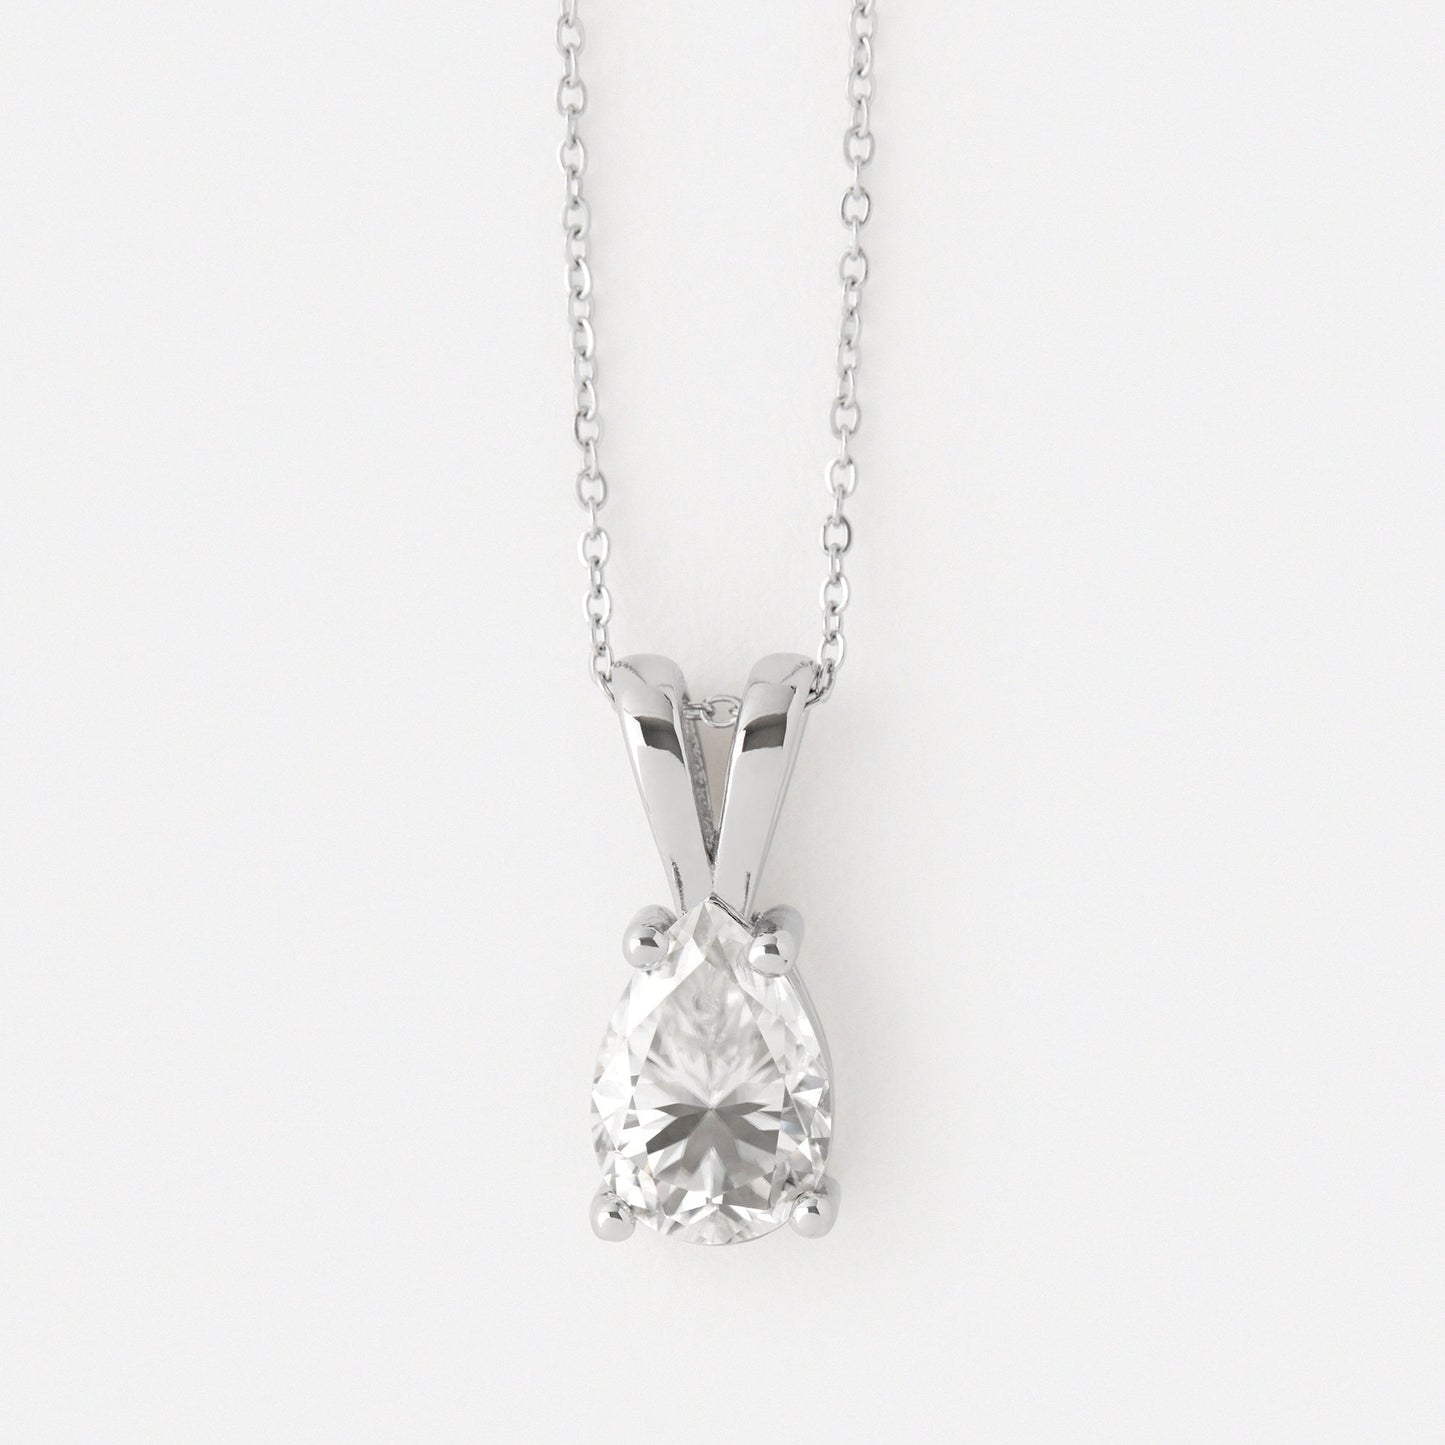 1.7ct Genuine moissanite Pear cut titanium pendant necklace 7x10mm, chain included